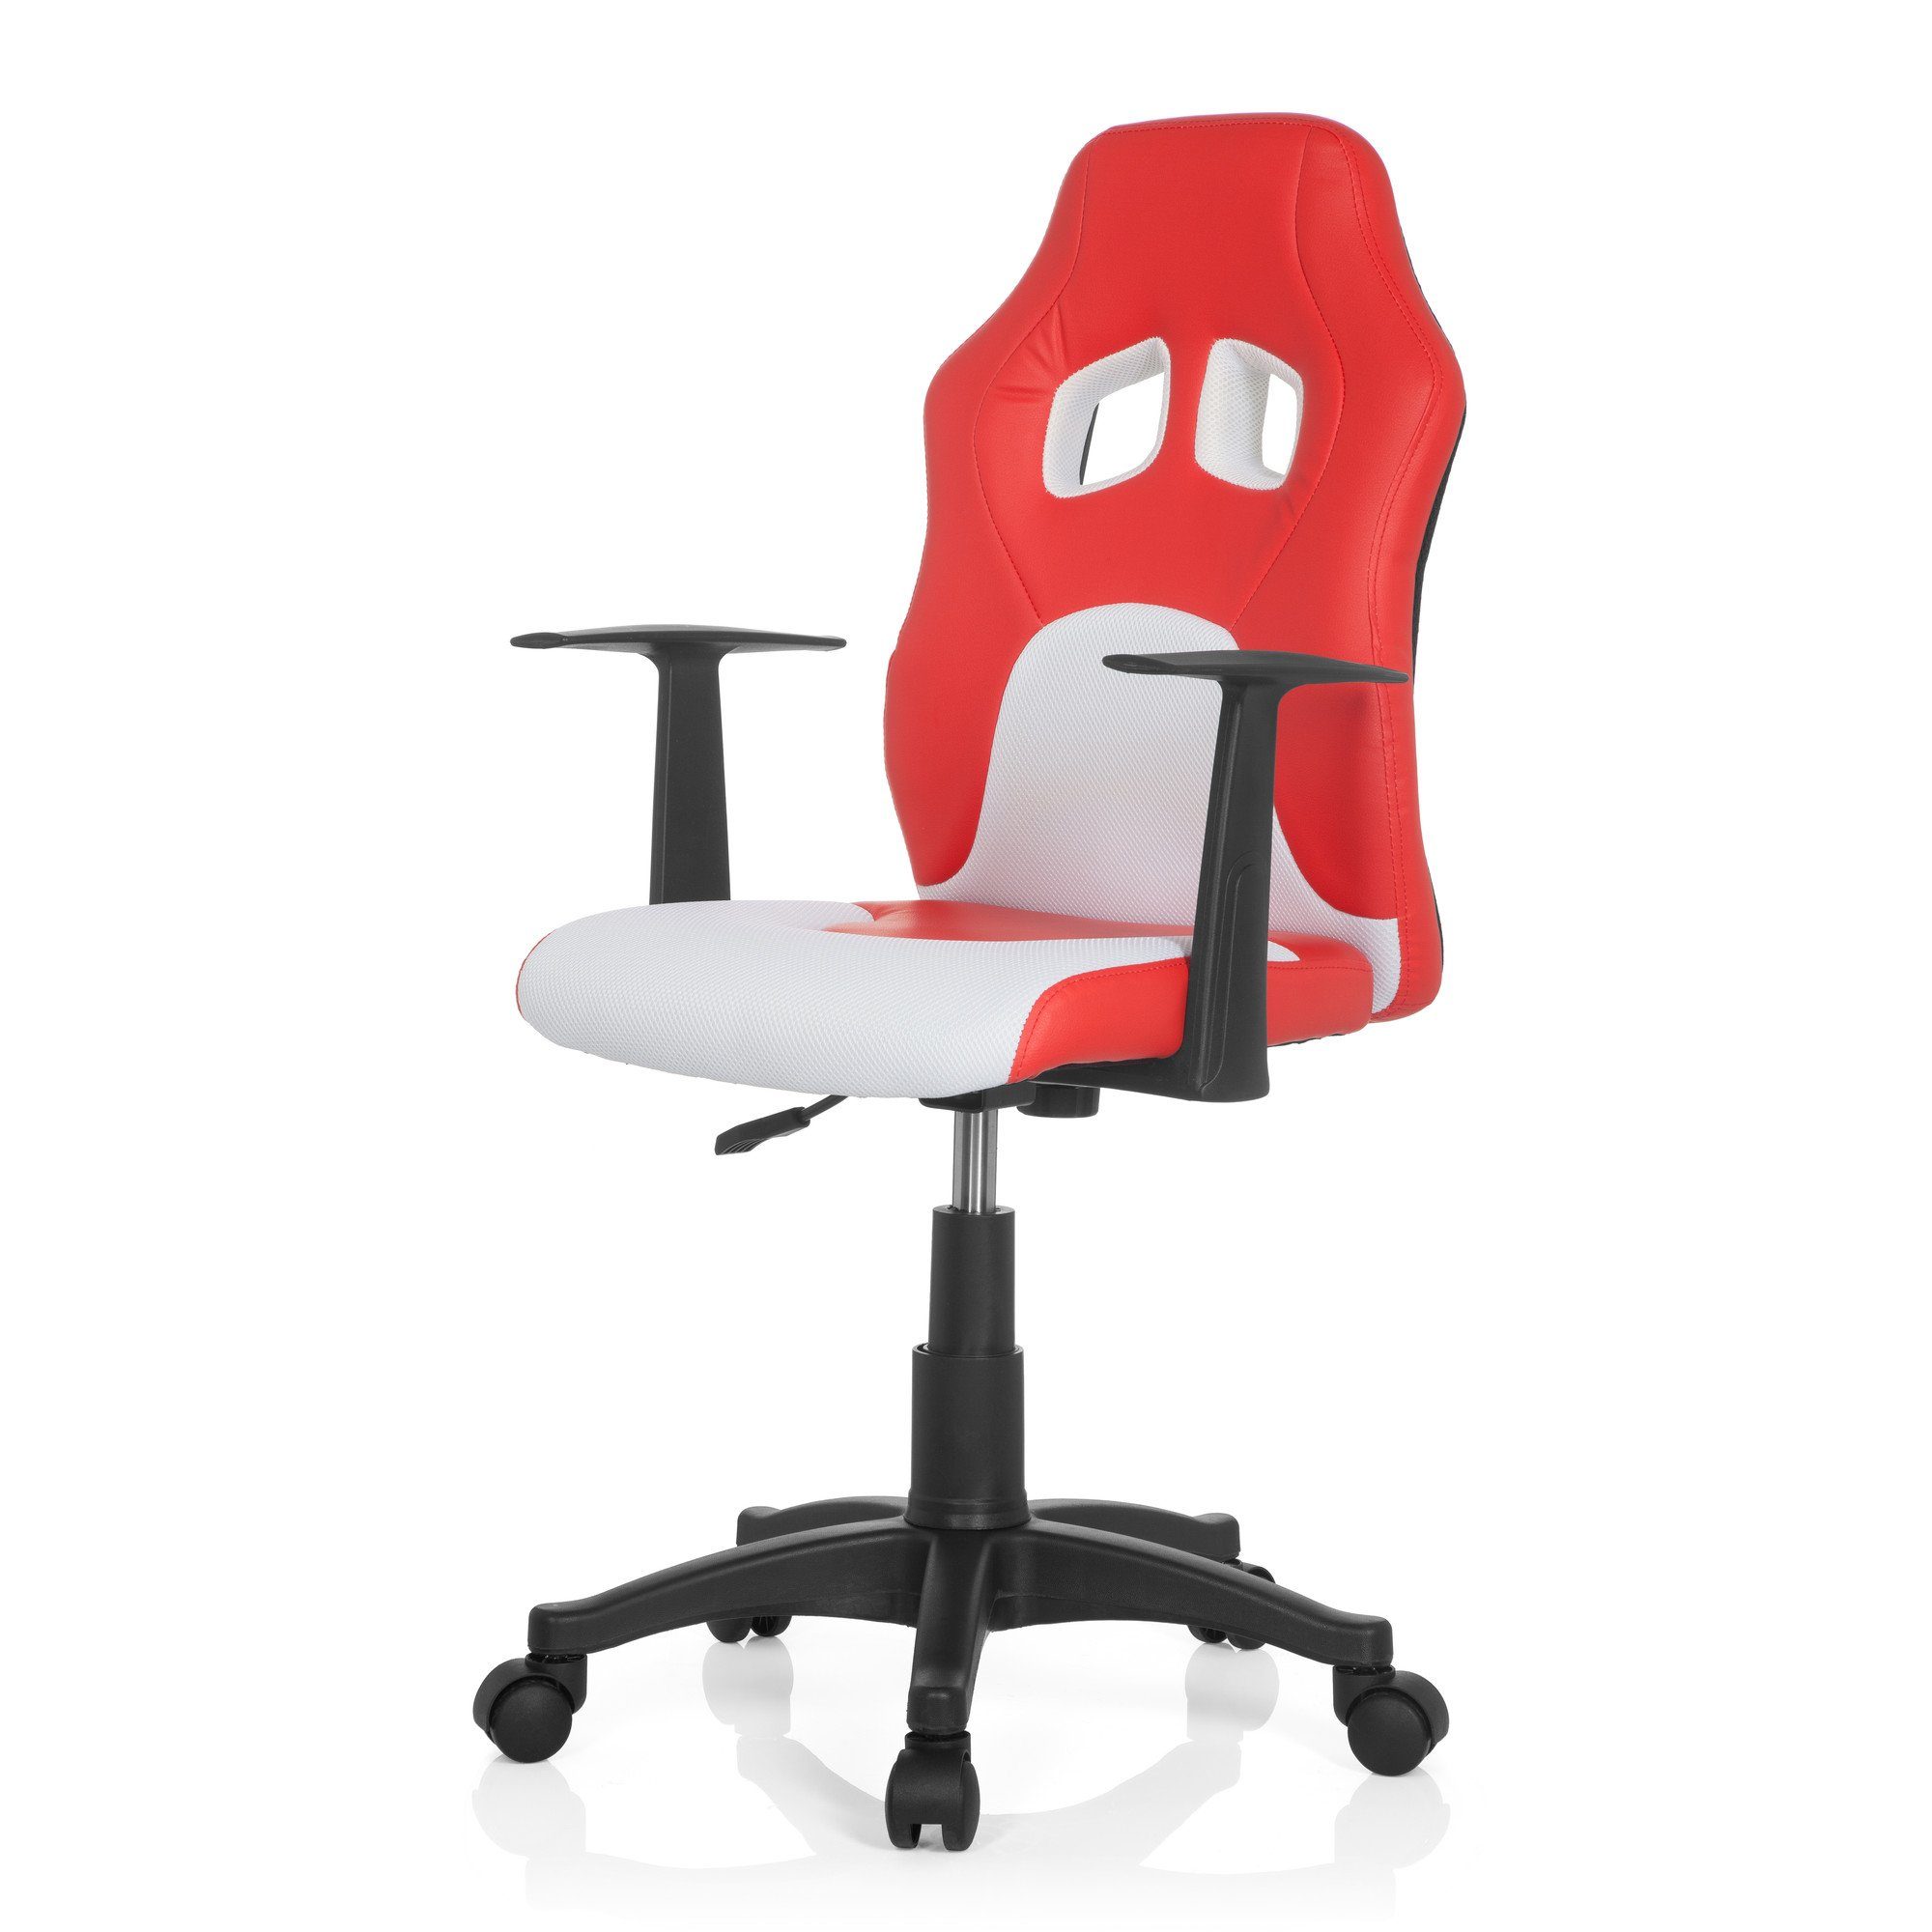 Drehstuhl OFFICE AL GAME Rot Weiß TEEN ergonomisch Kunstleder, Kinderdrehstuhl hjh /